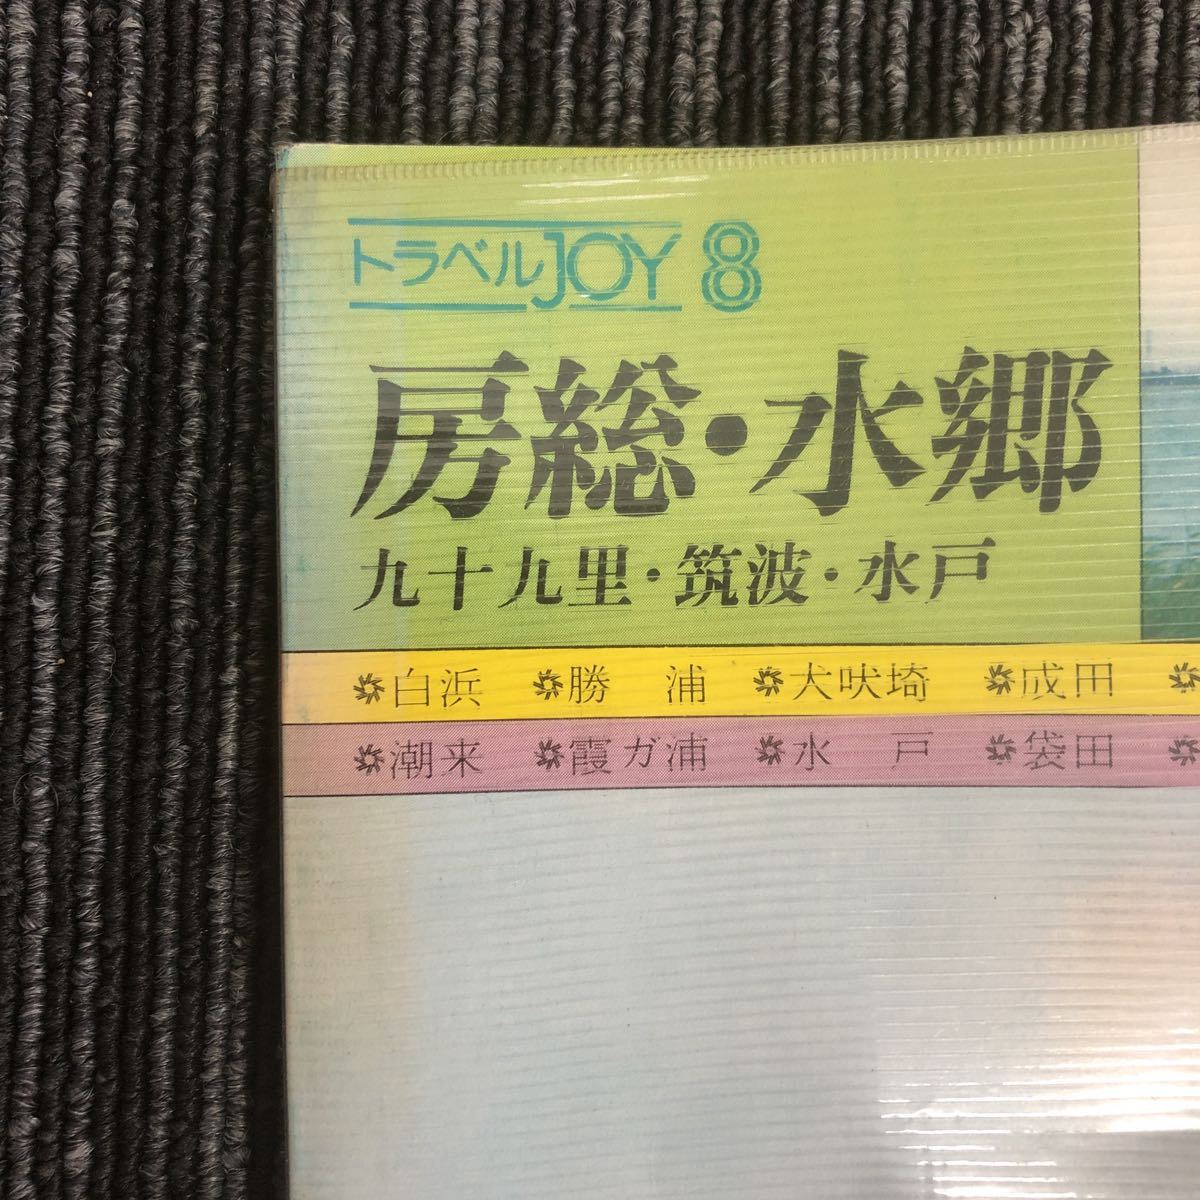 k[e3]* Showa era 56 year issue * travel JOY⑧. total * water . 9 10 9 .*. wave * Mito white ./../ dog ../ Narita /../../. pieces ./ Mito / sack rice field / Mashiko .